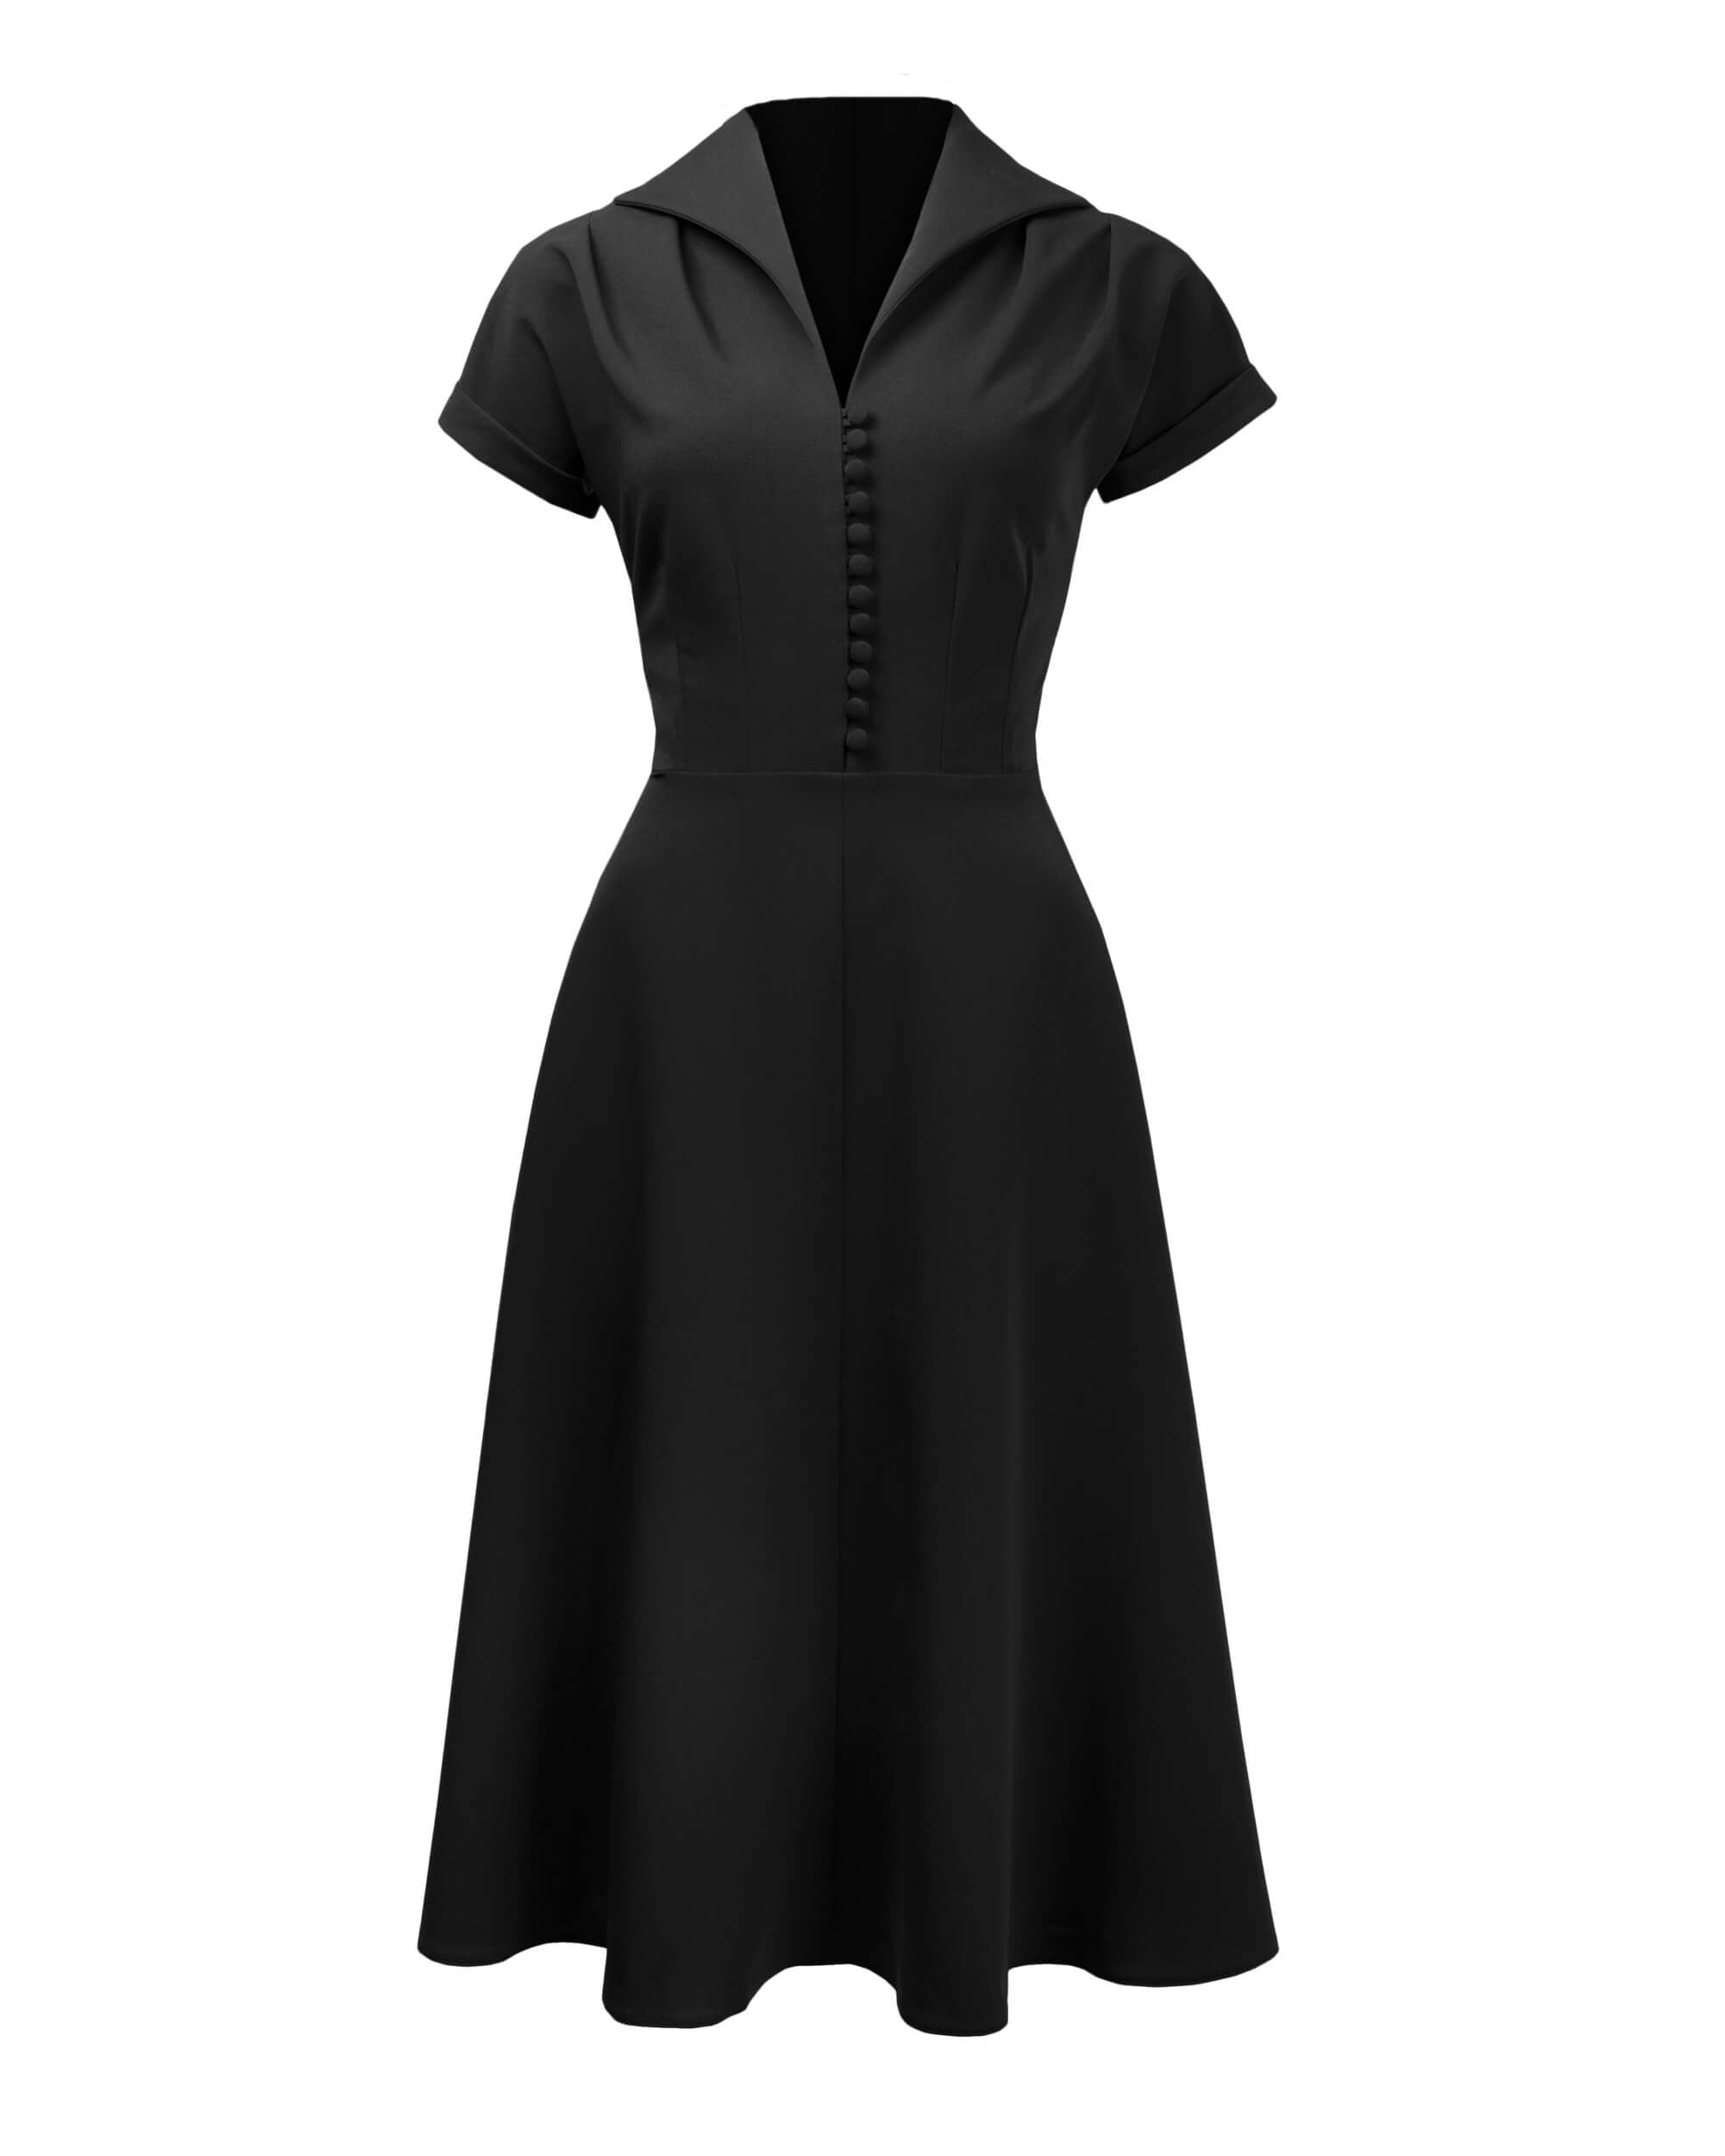 Pretty 40s Hostess Dress in Black